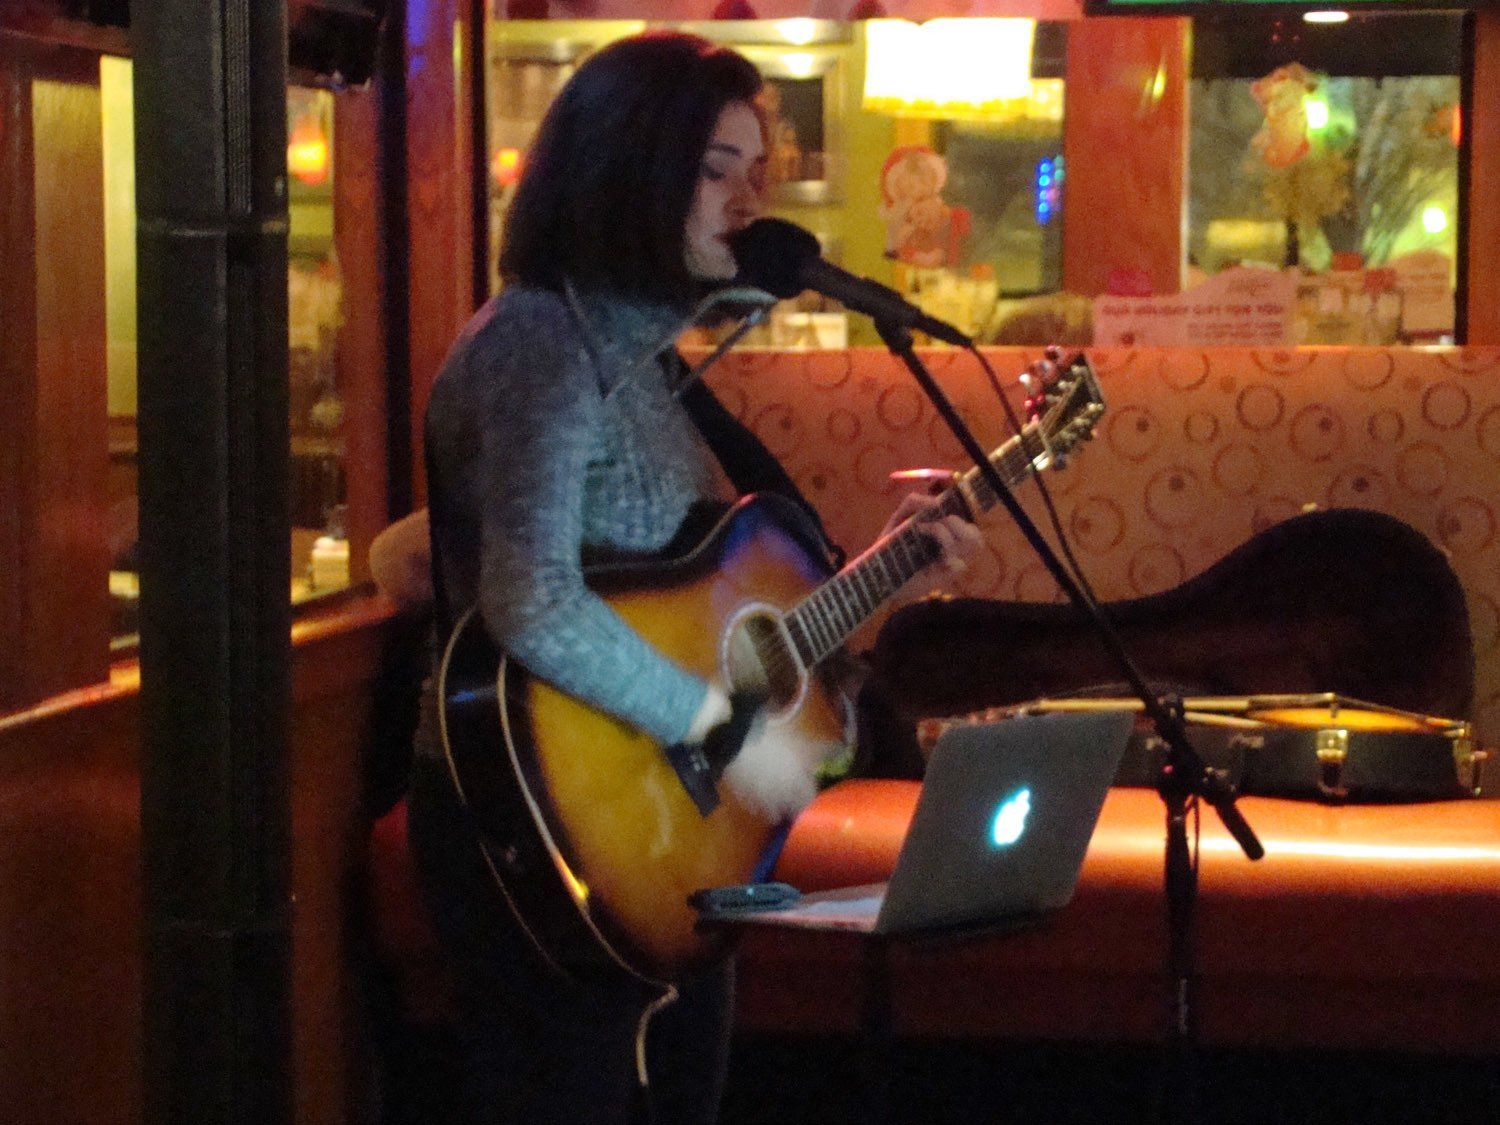 Shannon Harrington performing at Applebee's Restaurant